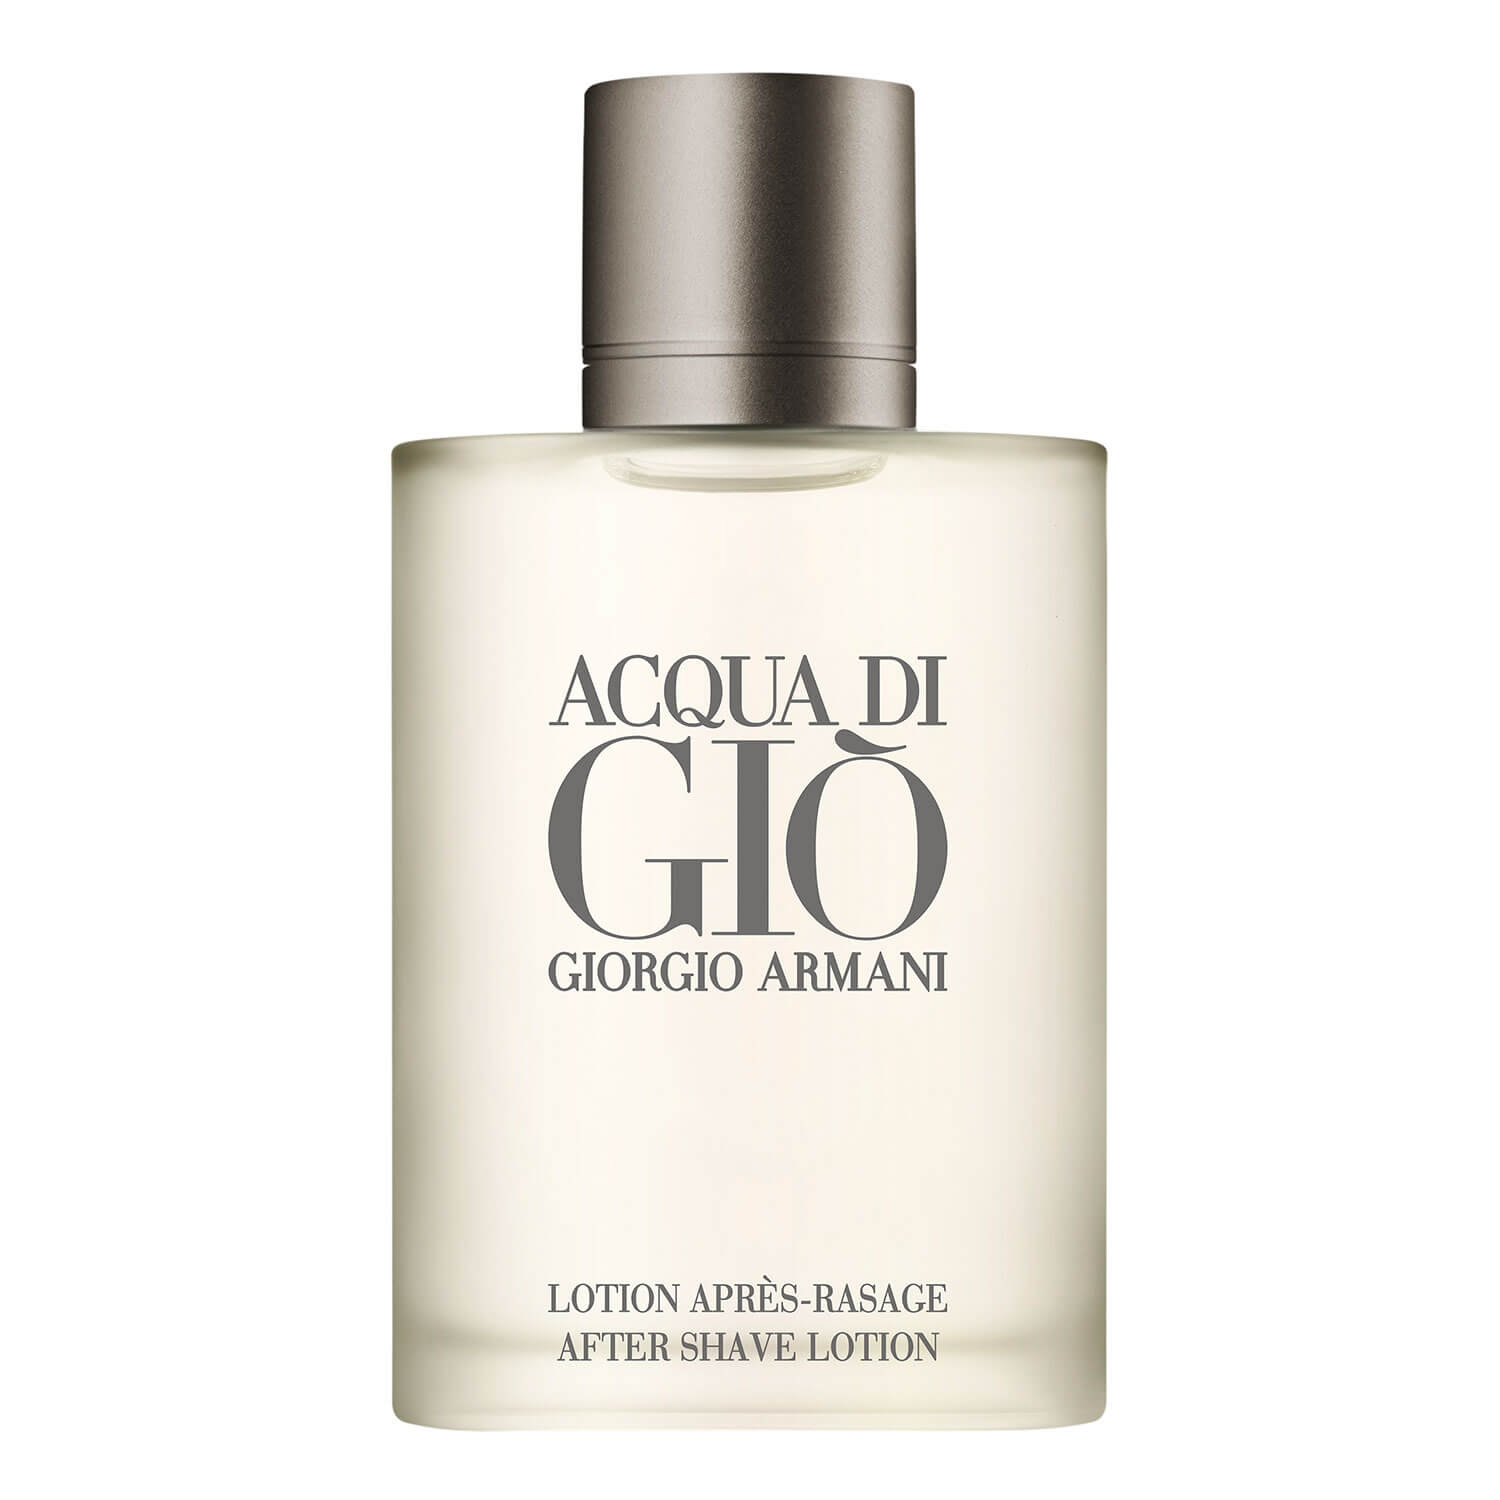 Produktbild von Acqua di Giò - After Shave